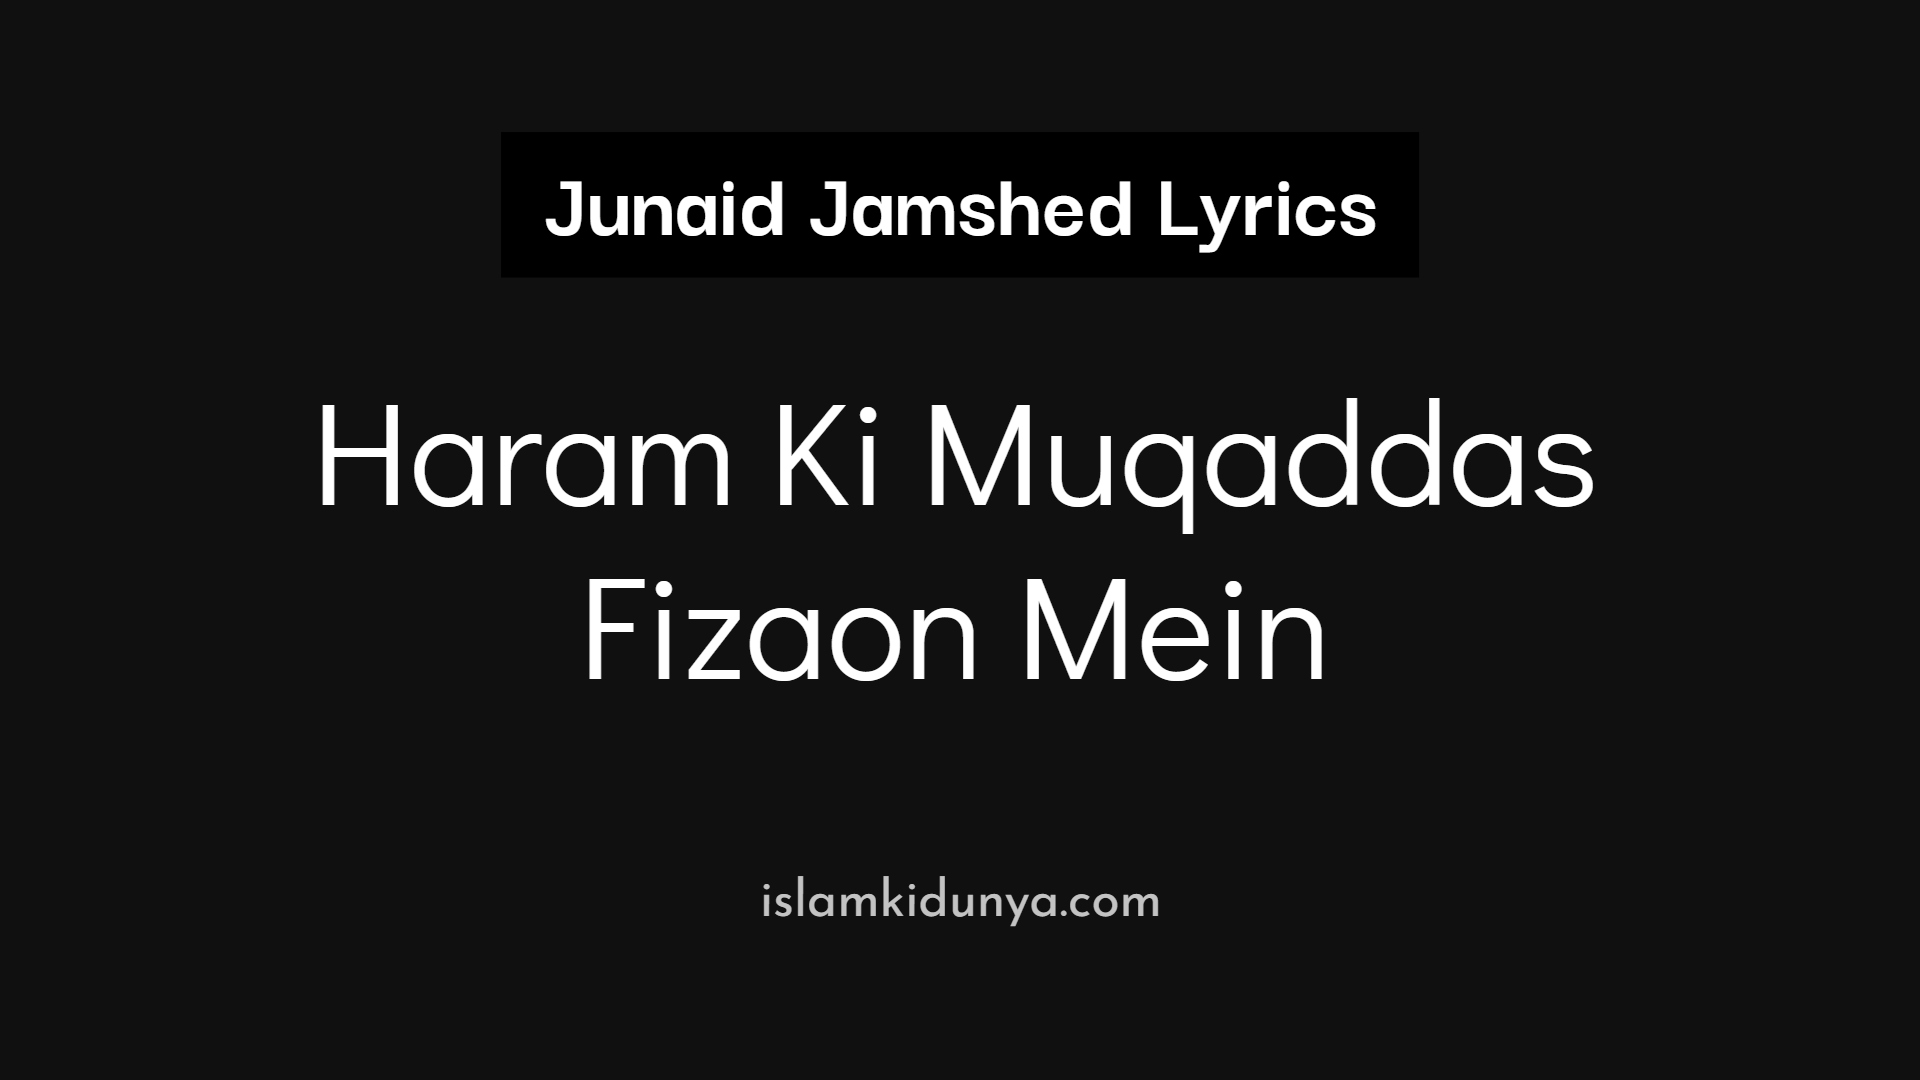 Haram Ki Muqaddas Fizaon Mein - Junaid Jamshed (Lyrics)